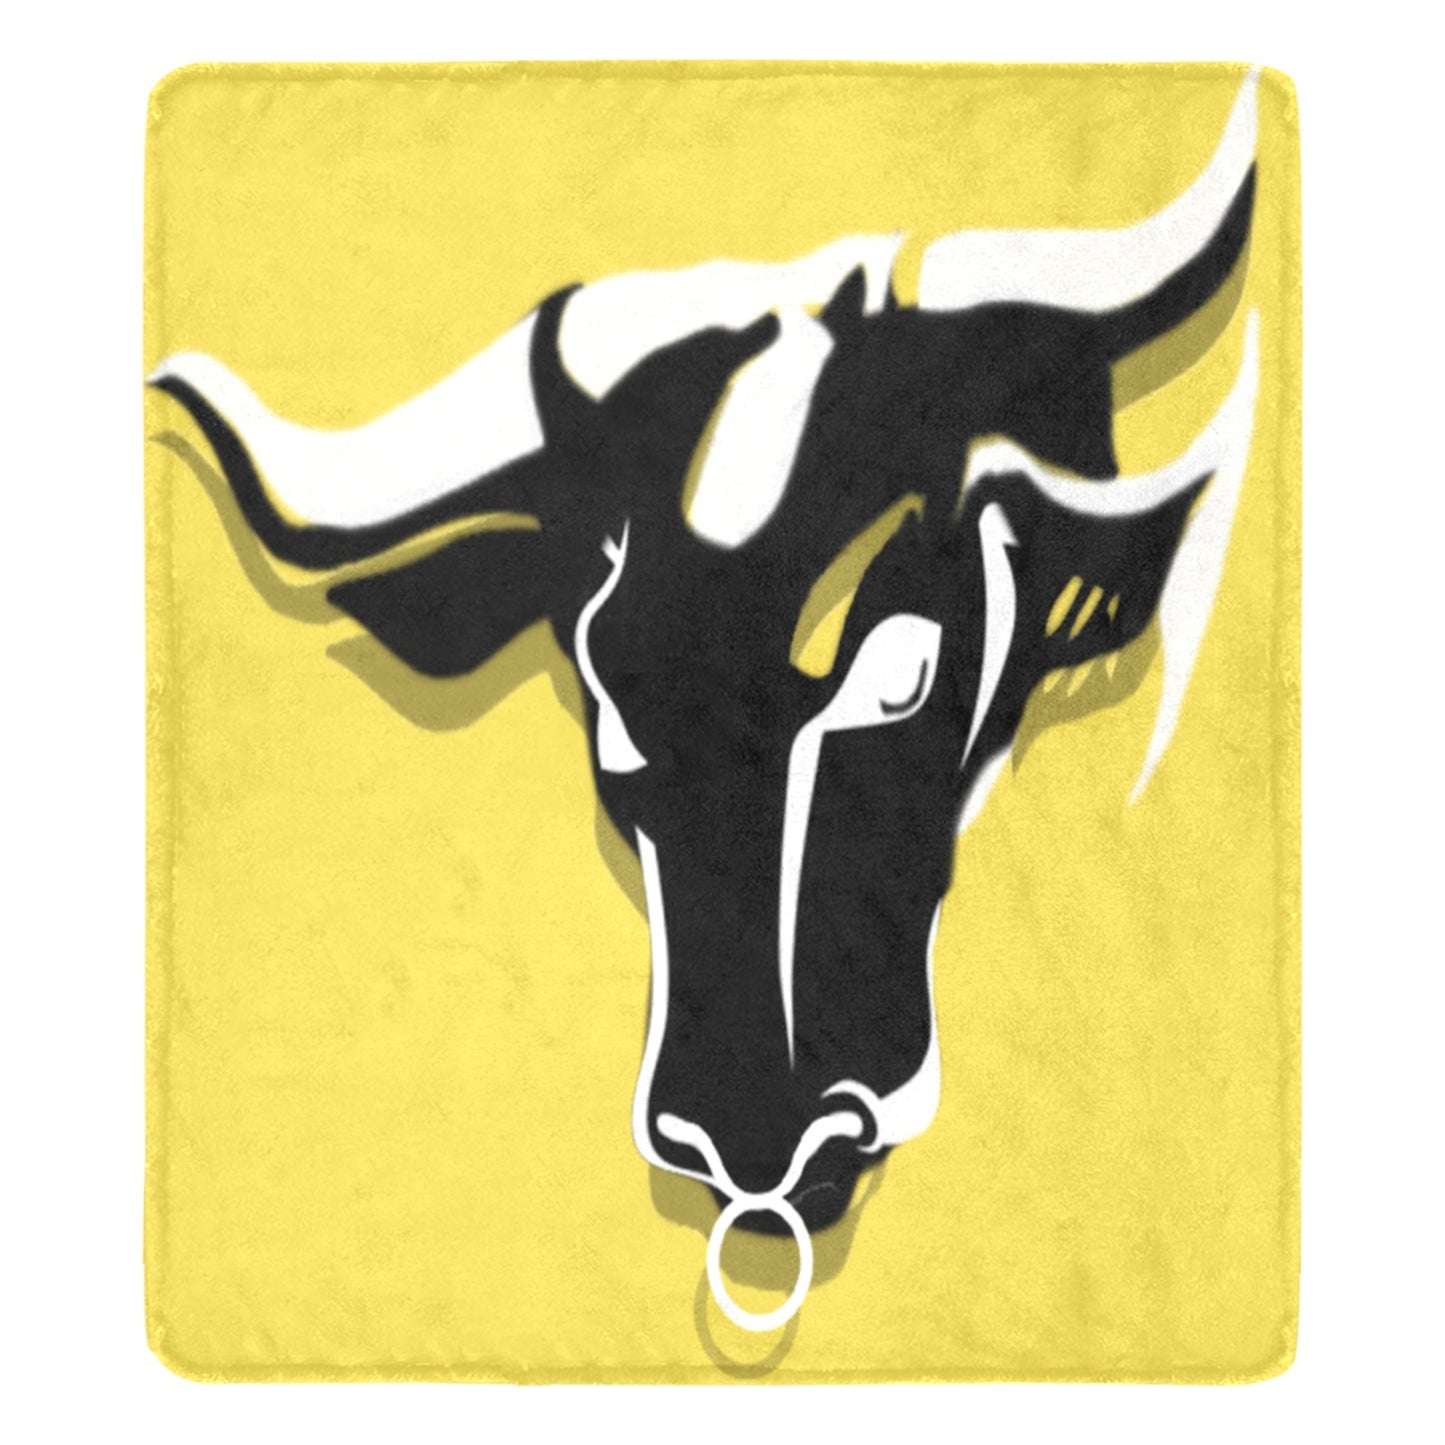 fz blanket bull (xl) one size / fz blanket - yellow ultra-soft micro fleece blanket 70"x80"